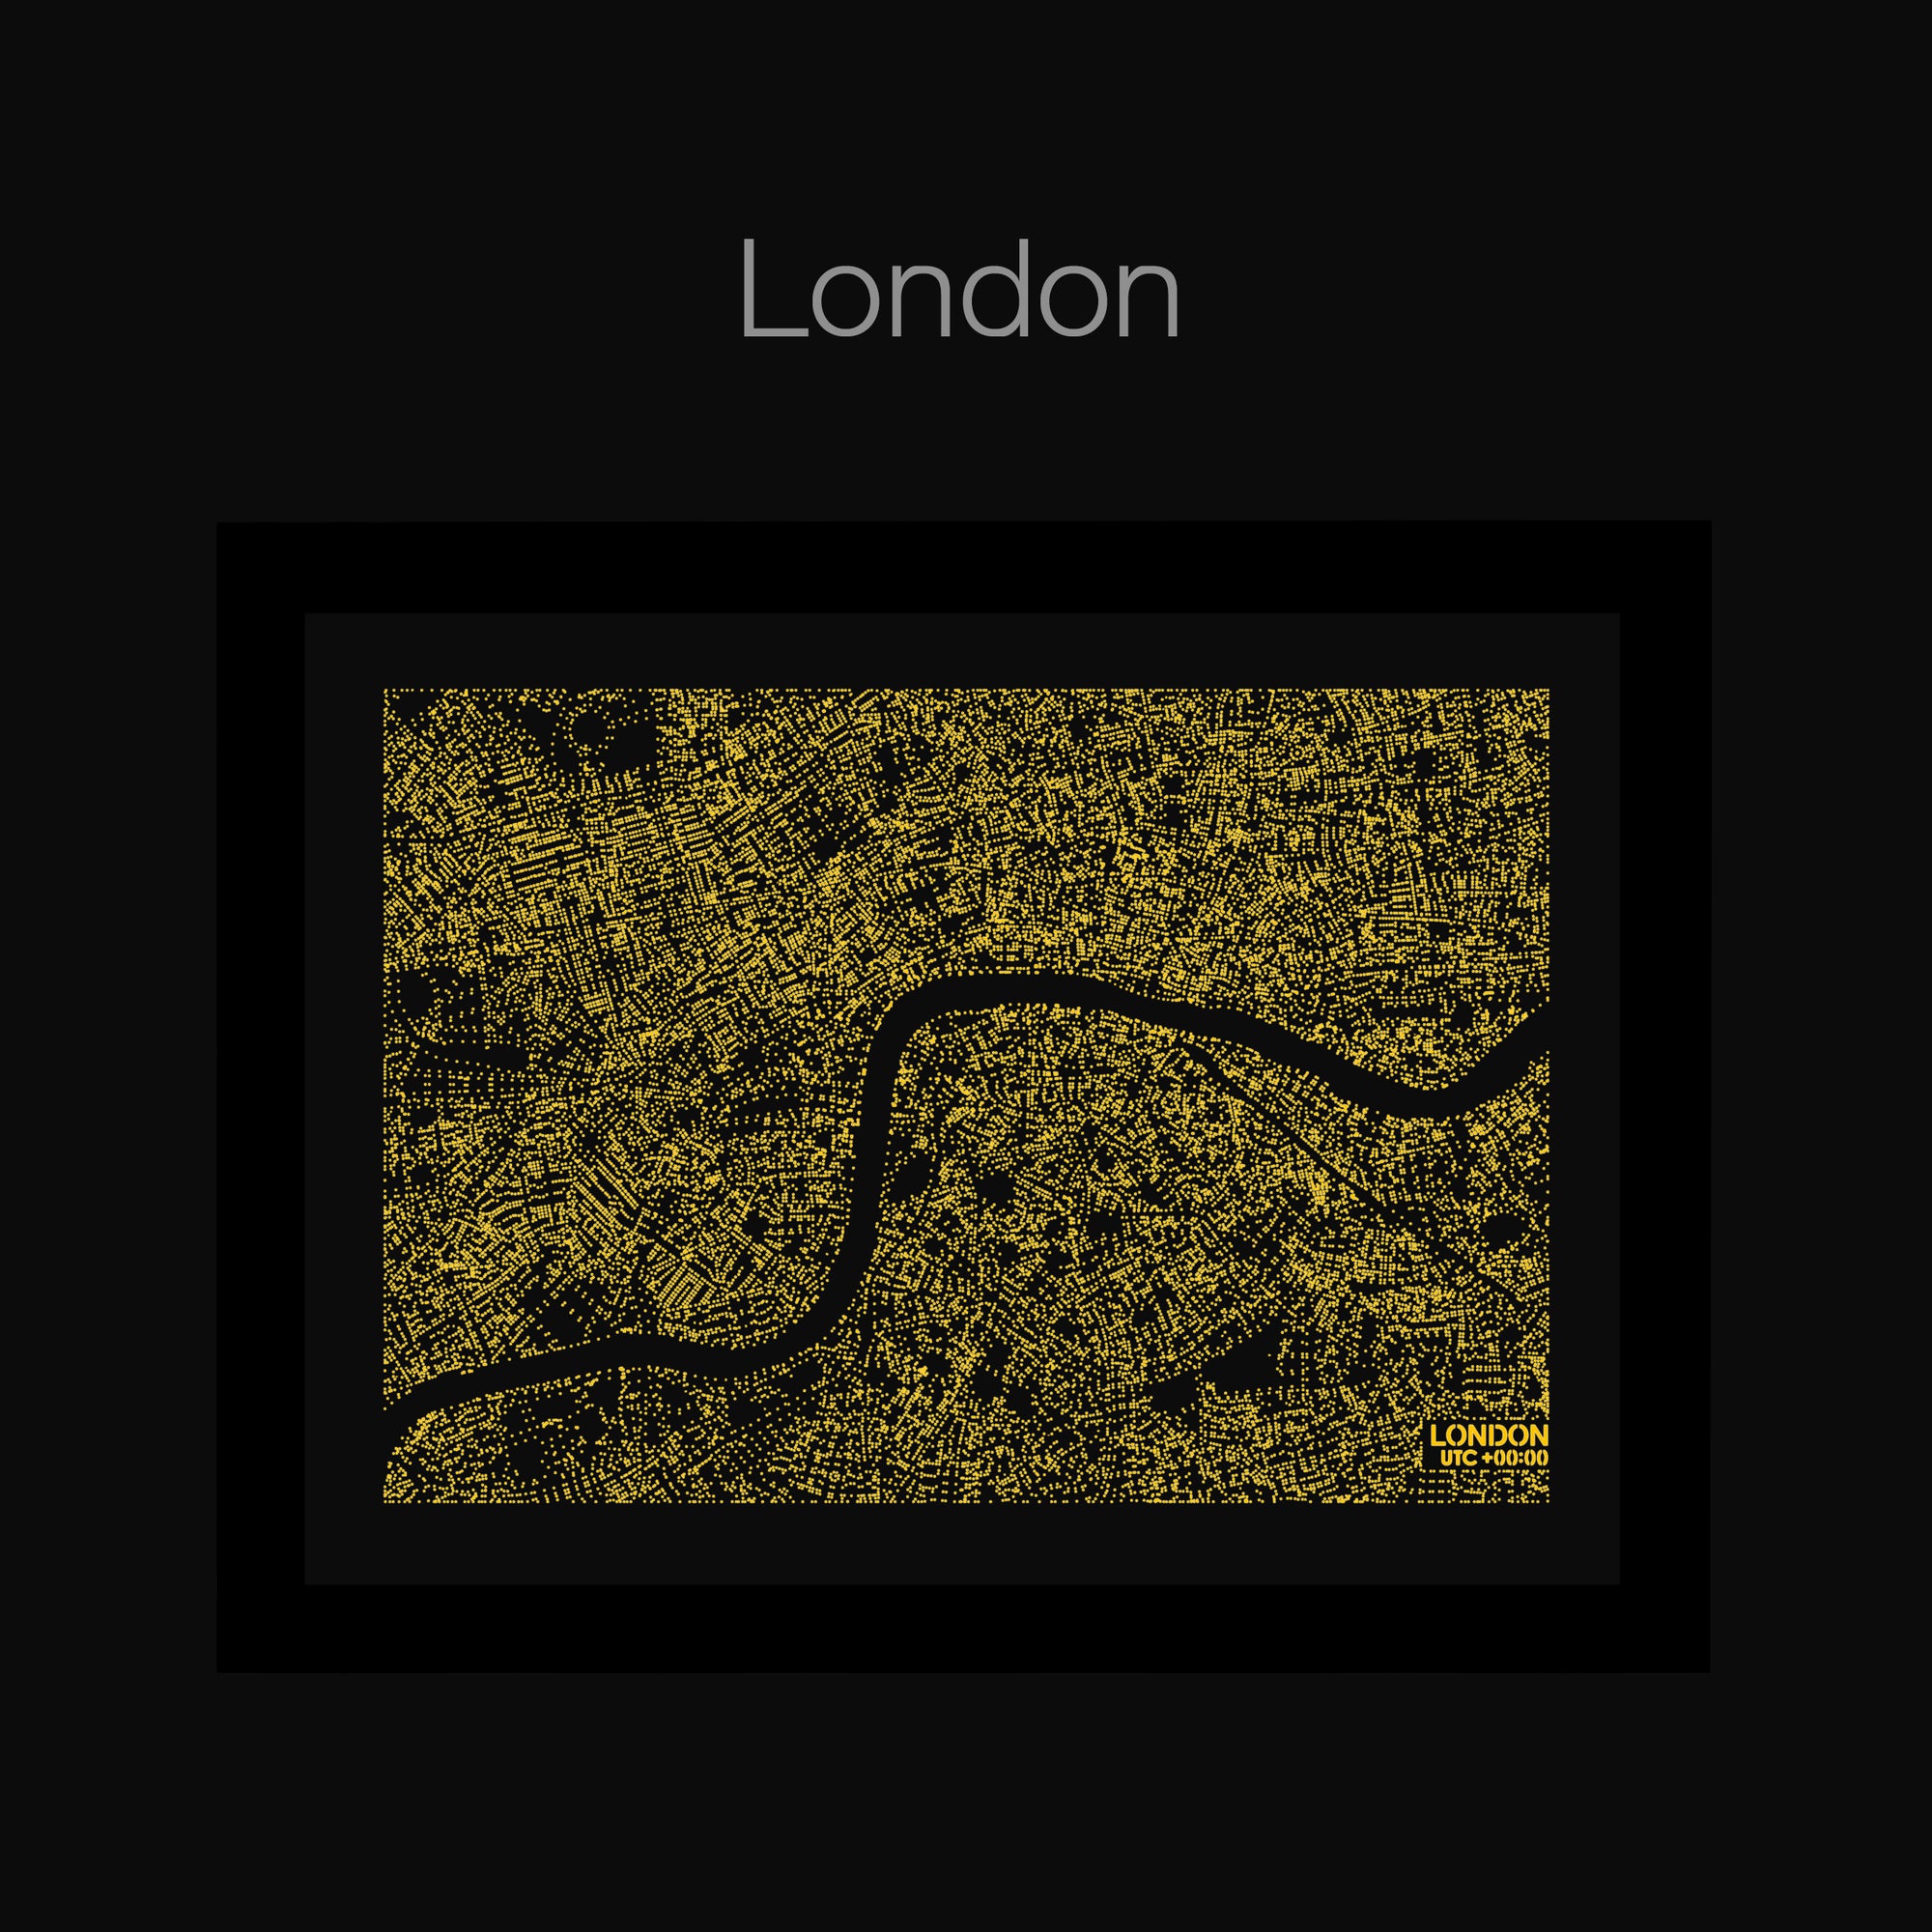 NITELANDING London Map - Lighting Decoration Art - ZERO DEGREE